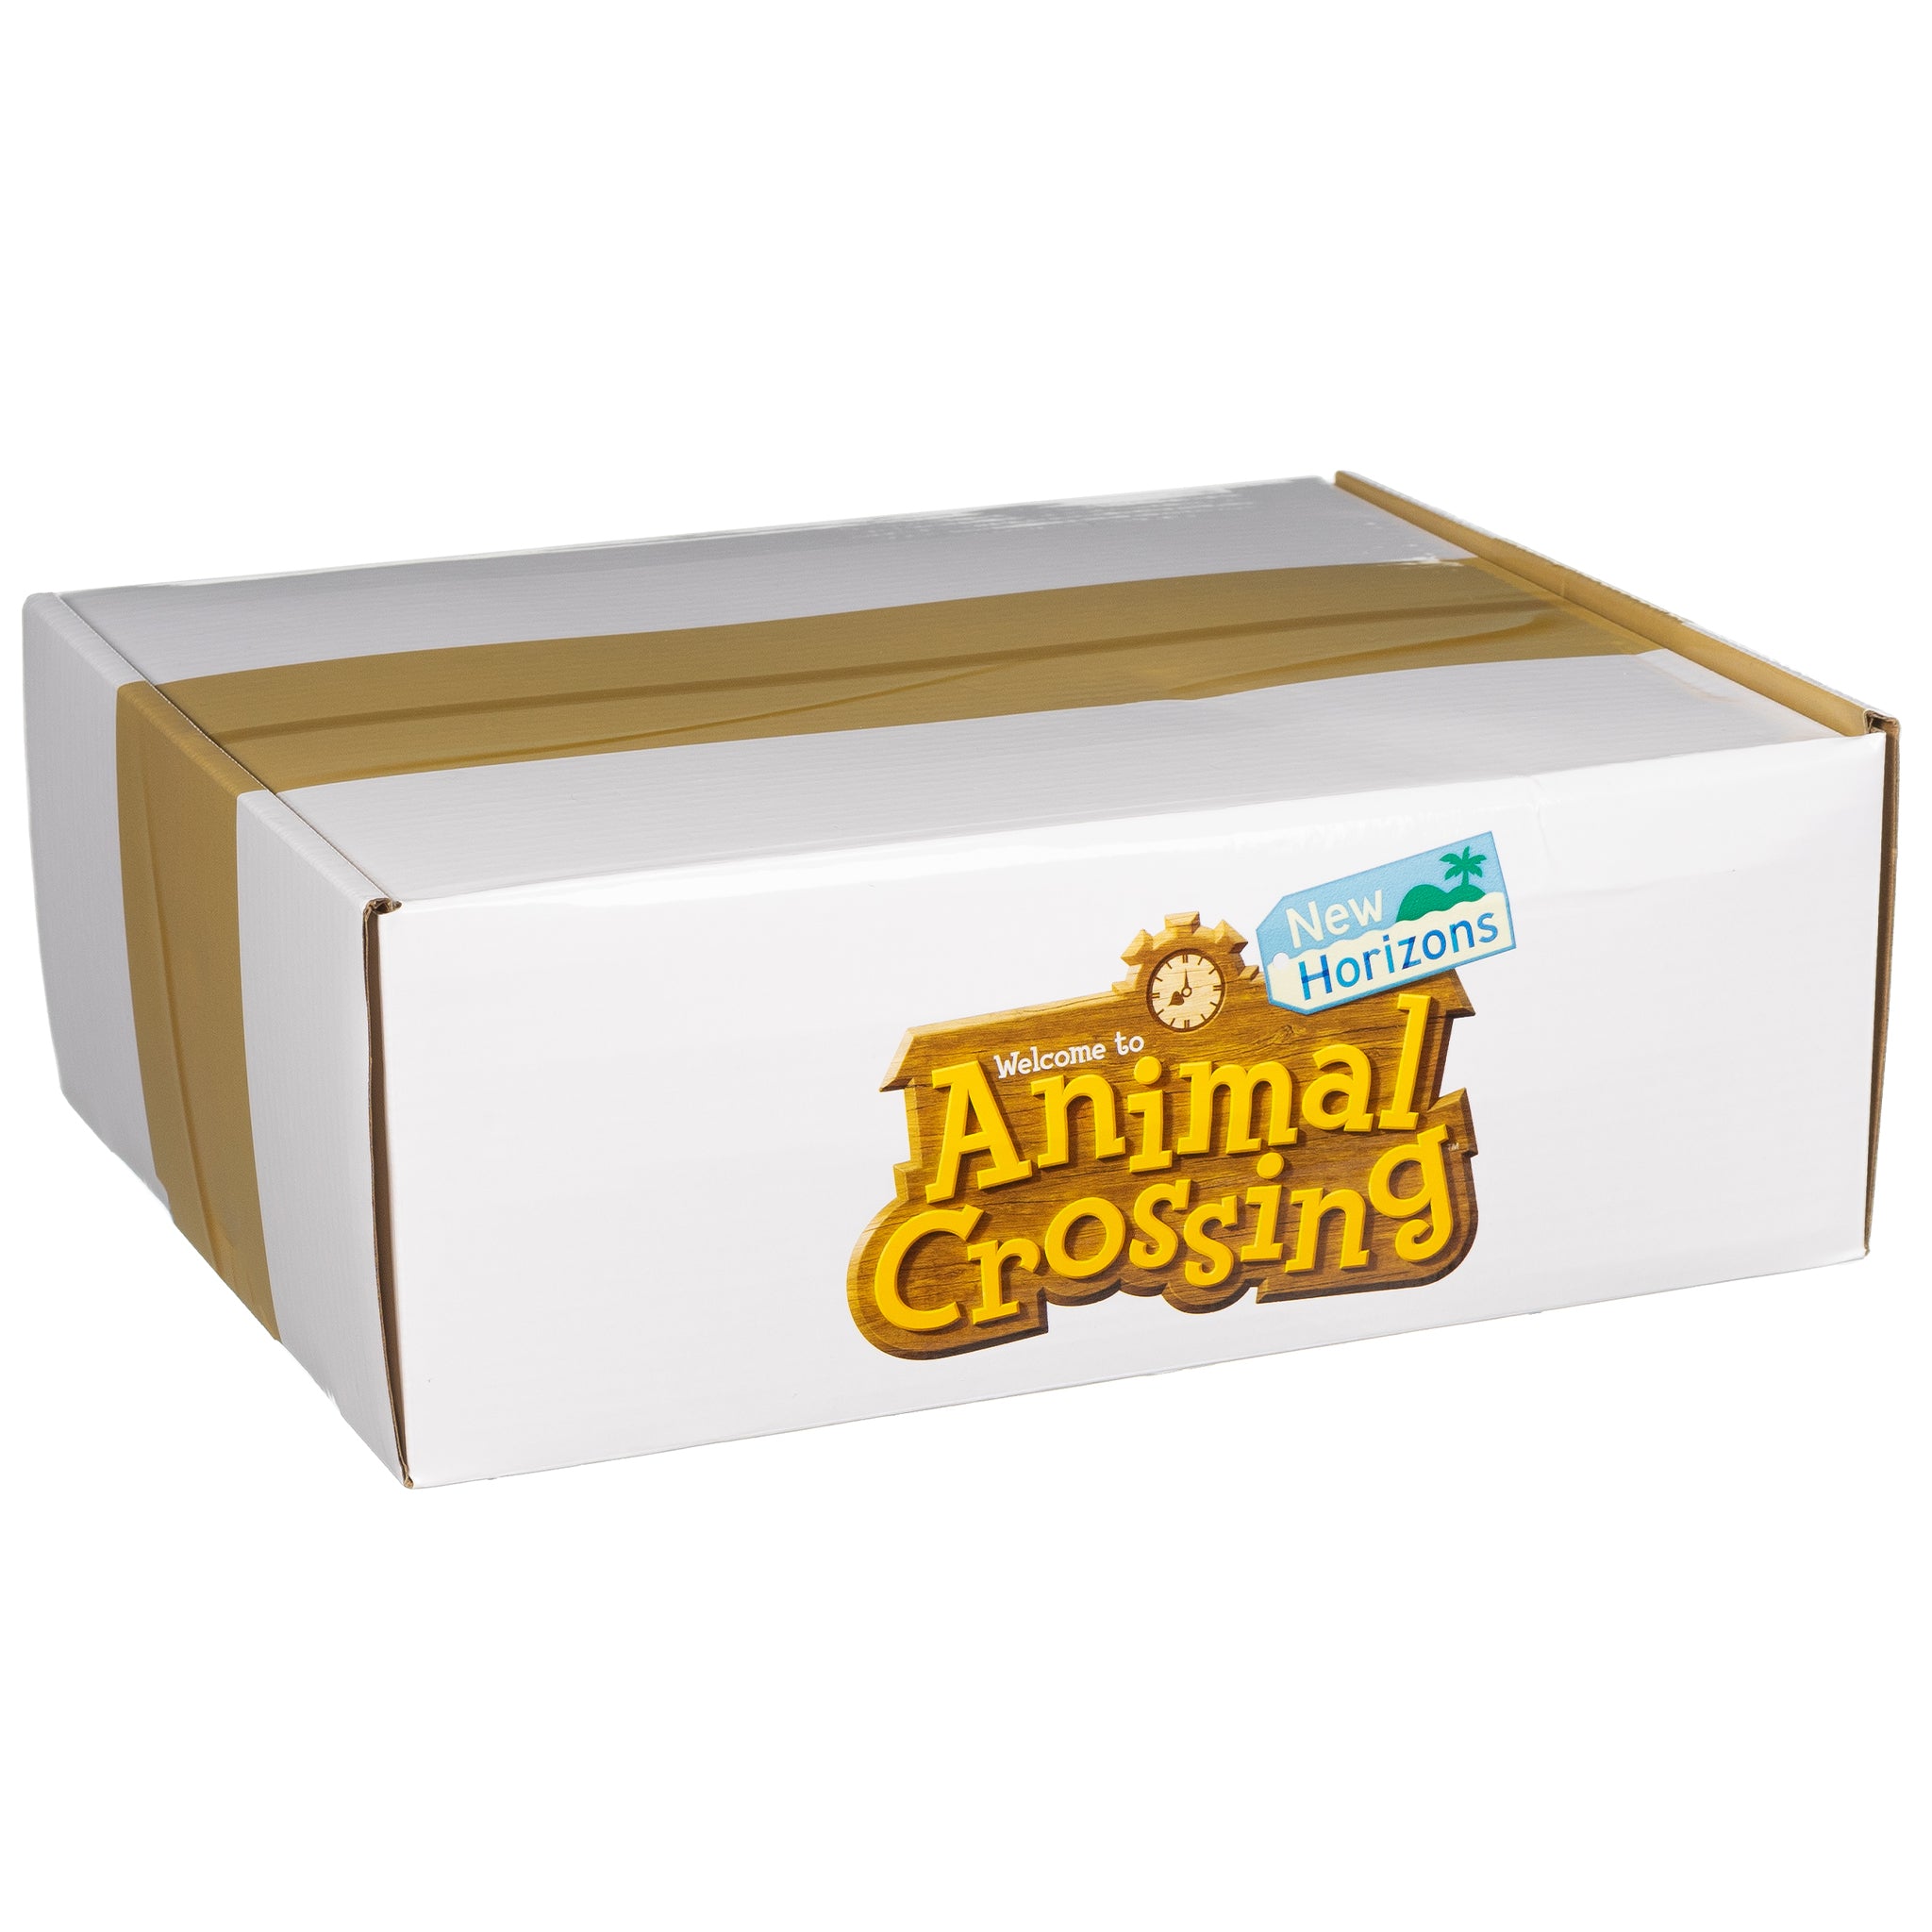 Animal Crossing White Box